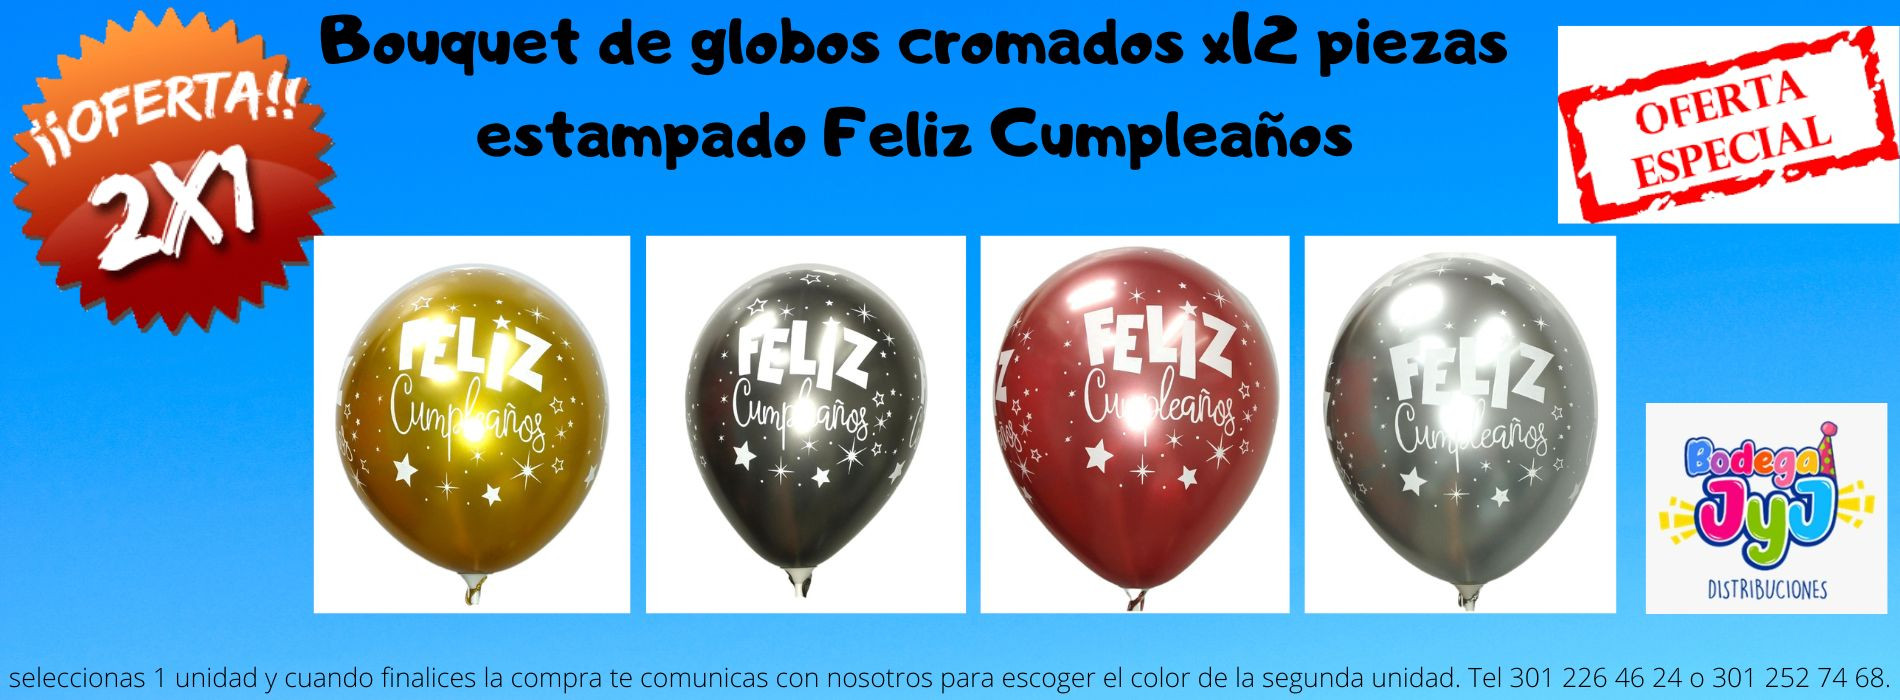 https://www.pinateriatufiesta.com/globos-r12-cromados-feliz-cumpleanos-